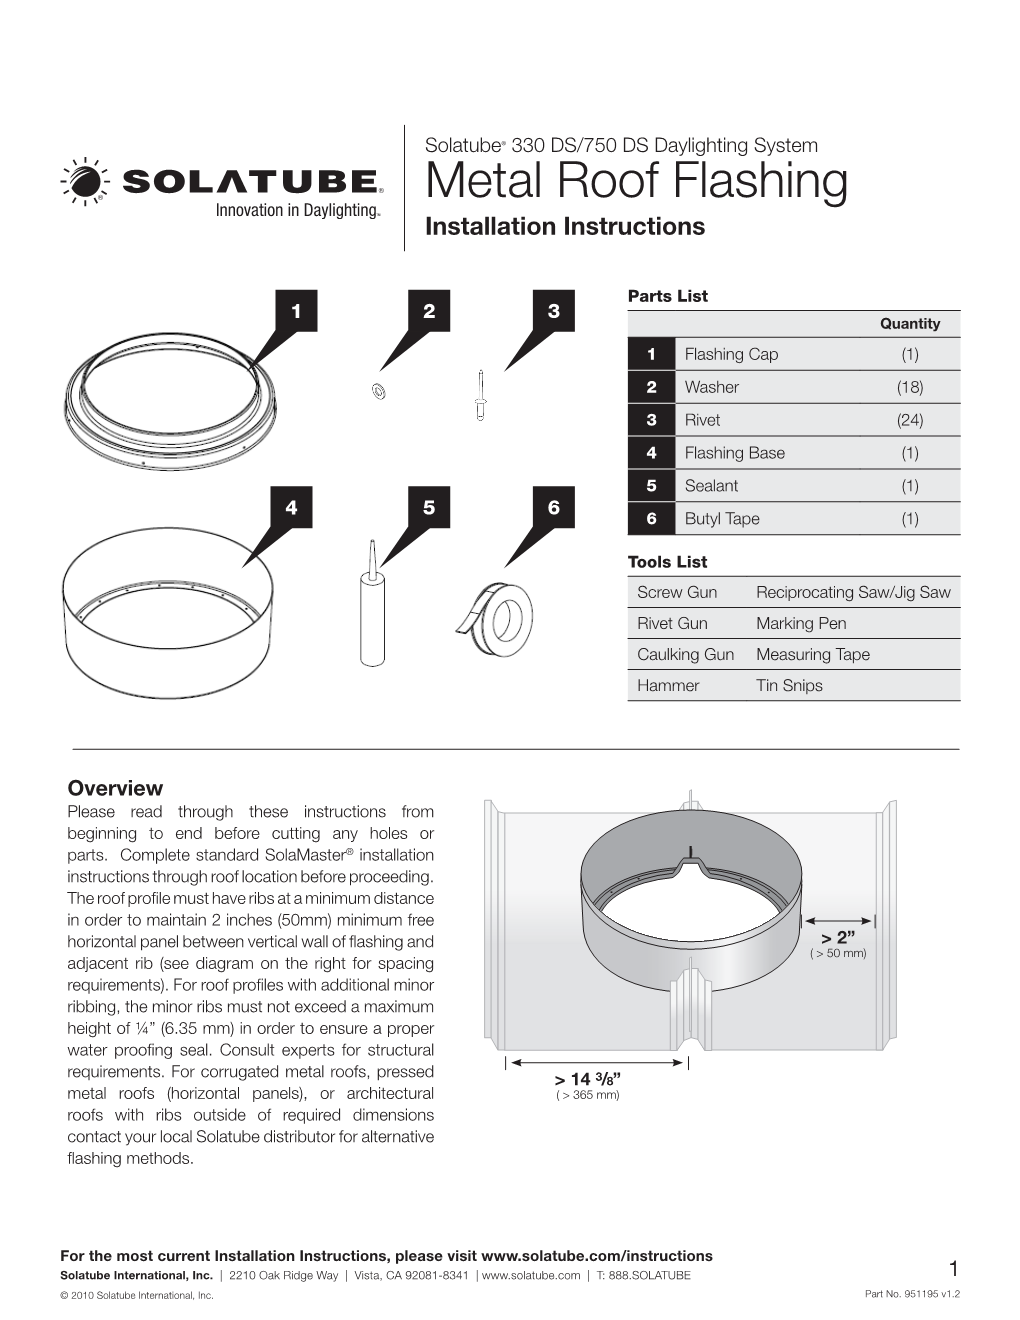 Metal Roof Flashing Installation Instructions